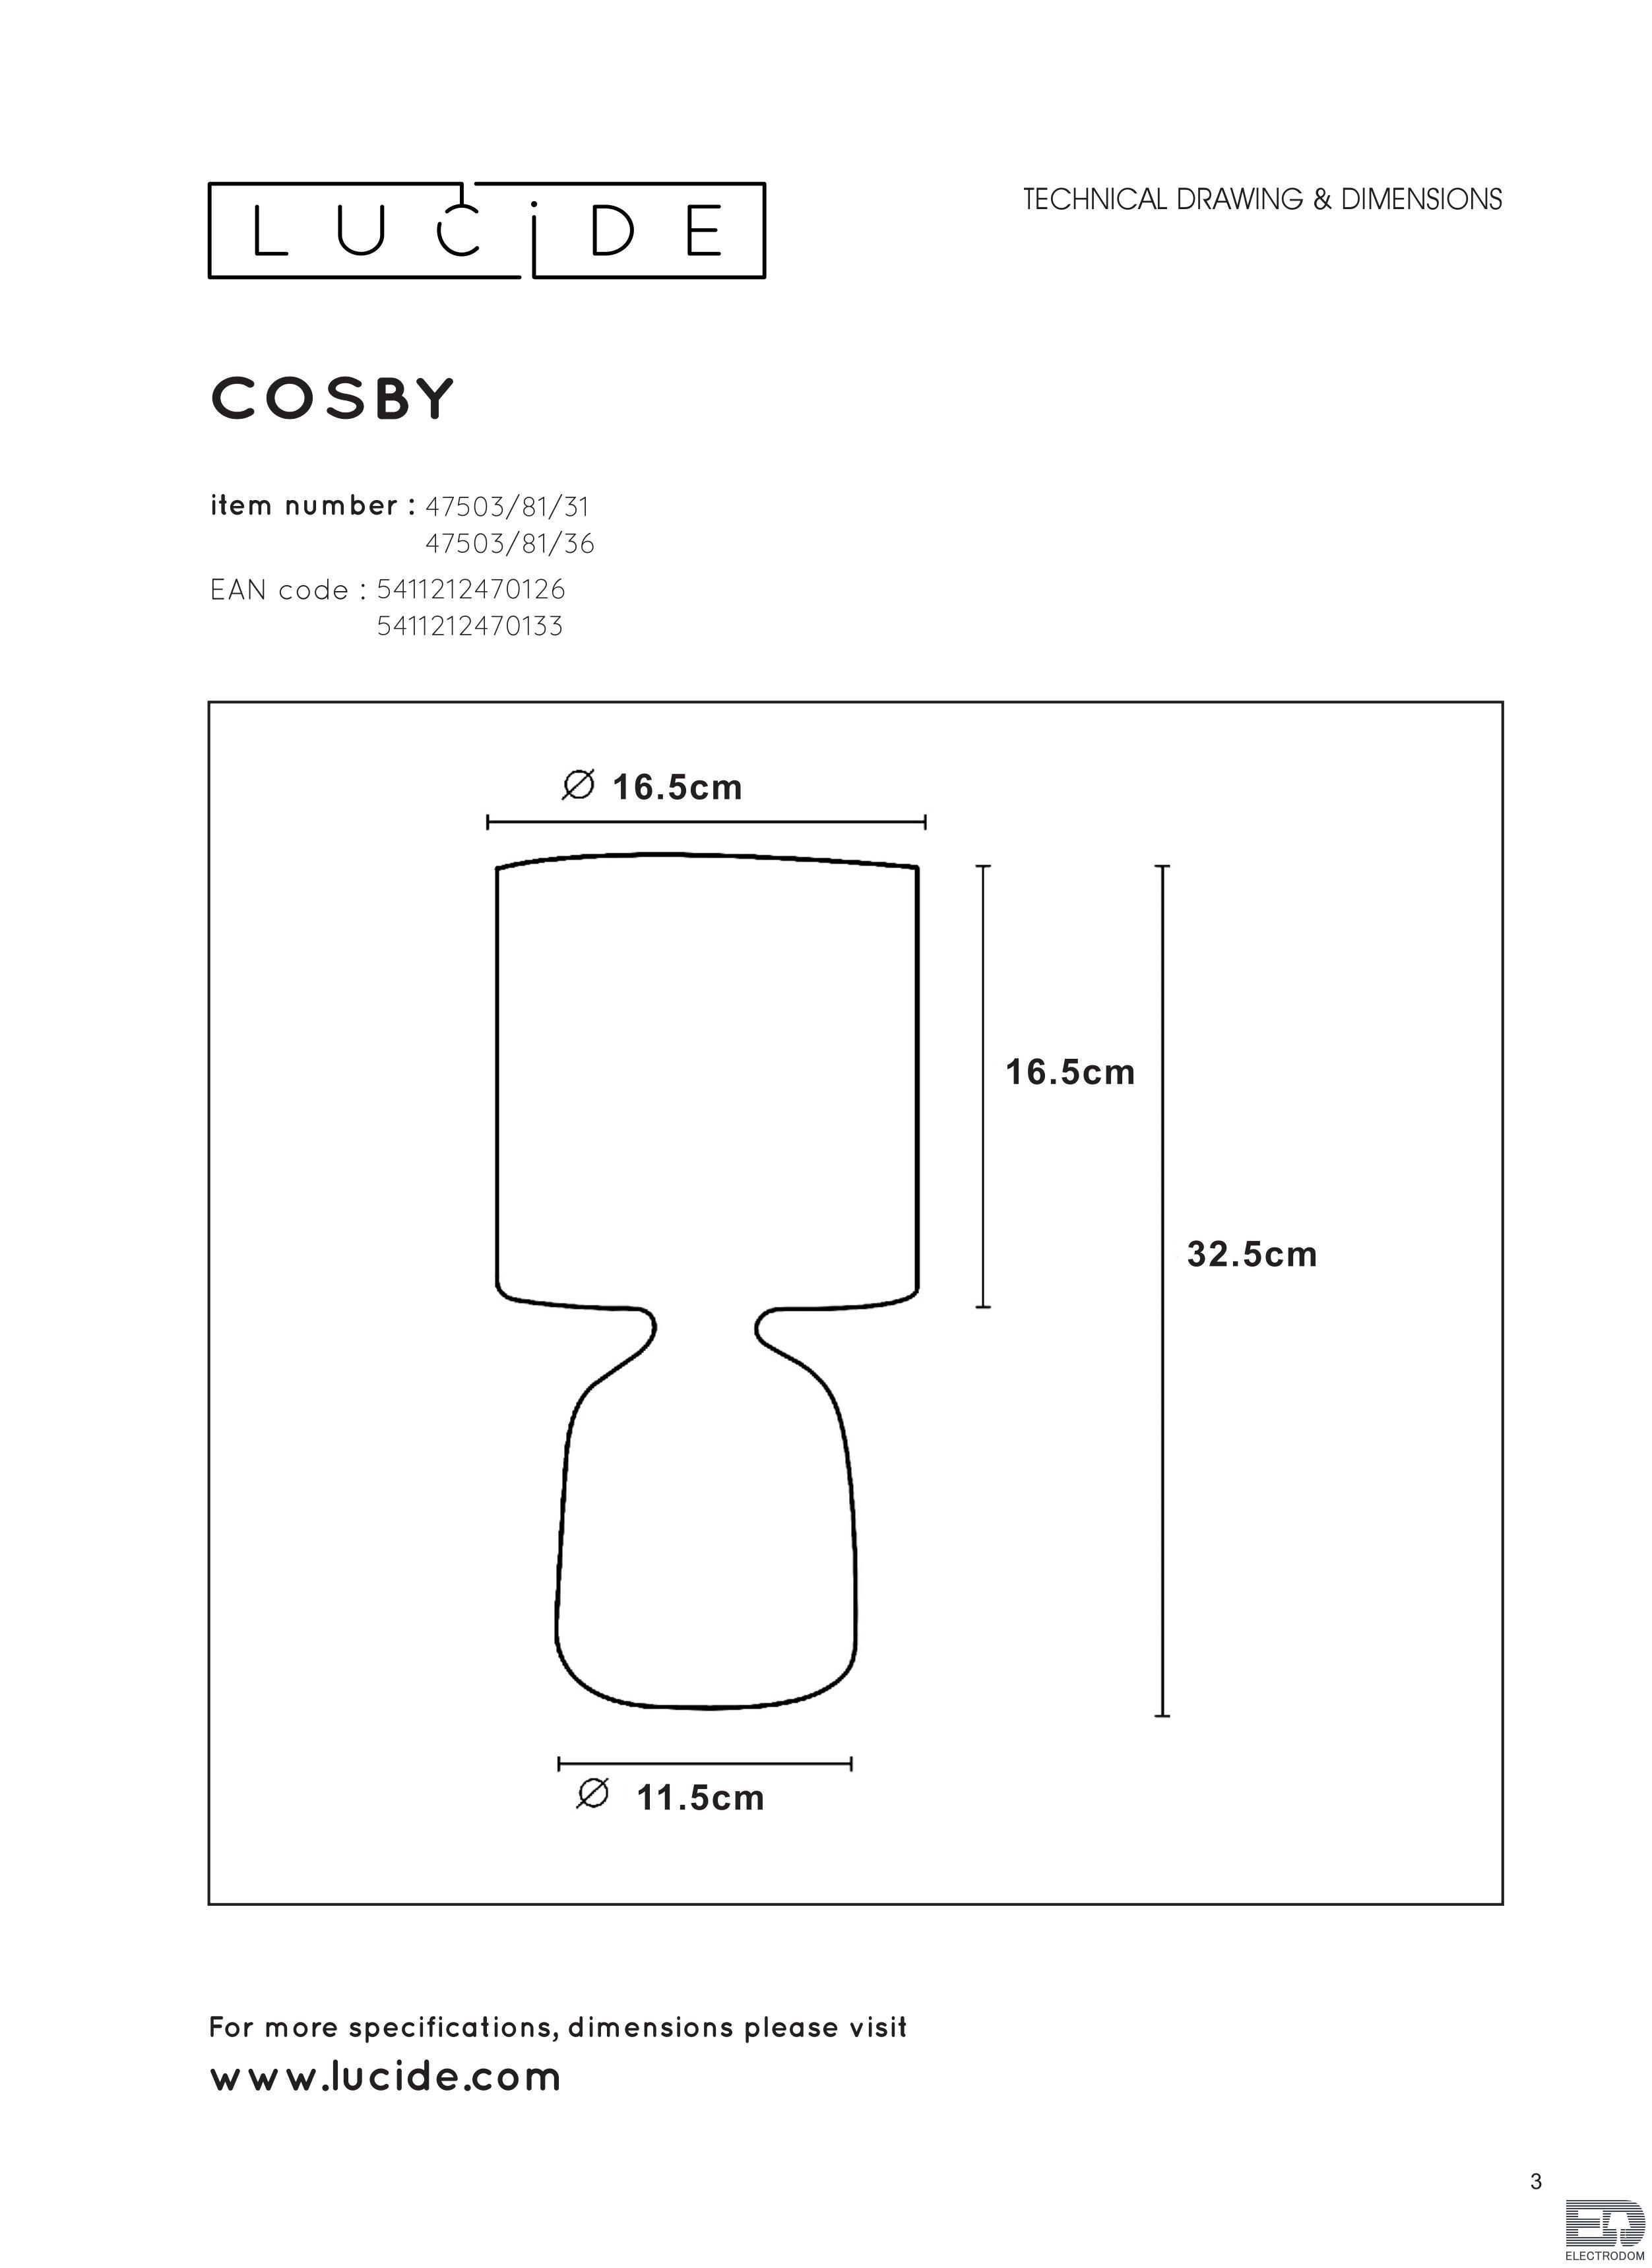 Настольная лампа Lucide Cosby 47503/81/36 - цена и фото 4